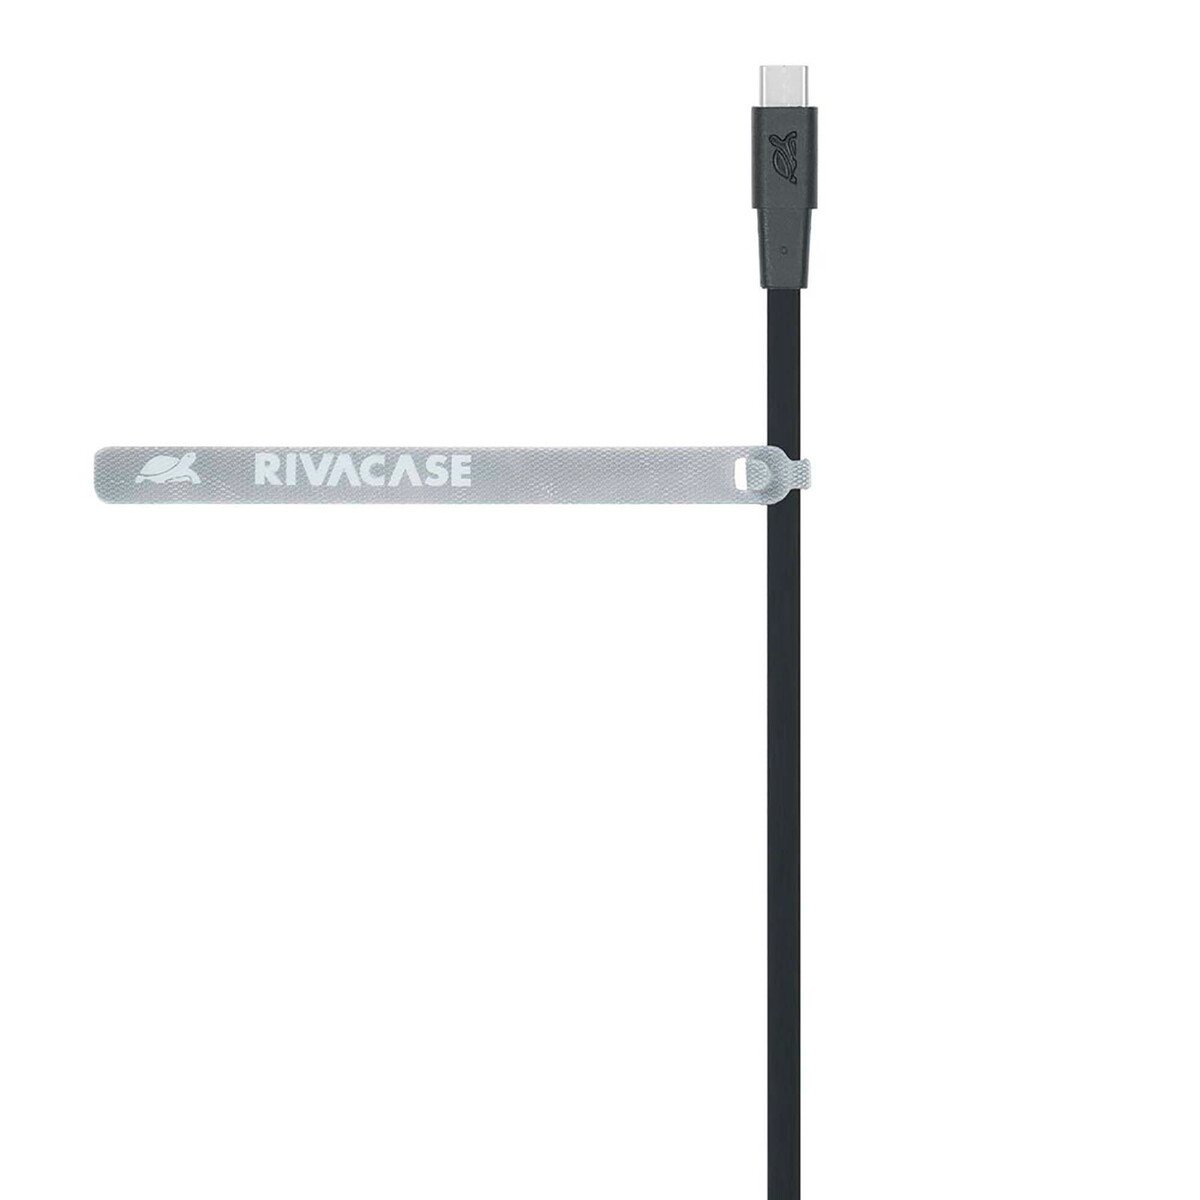 Rivacase Type-C Cable PS6002 1.2M Black